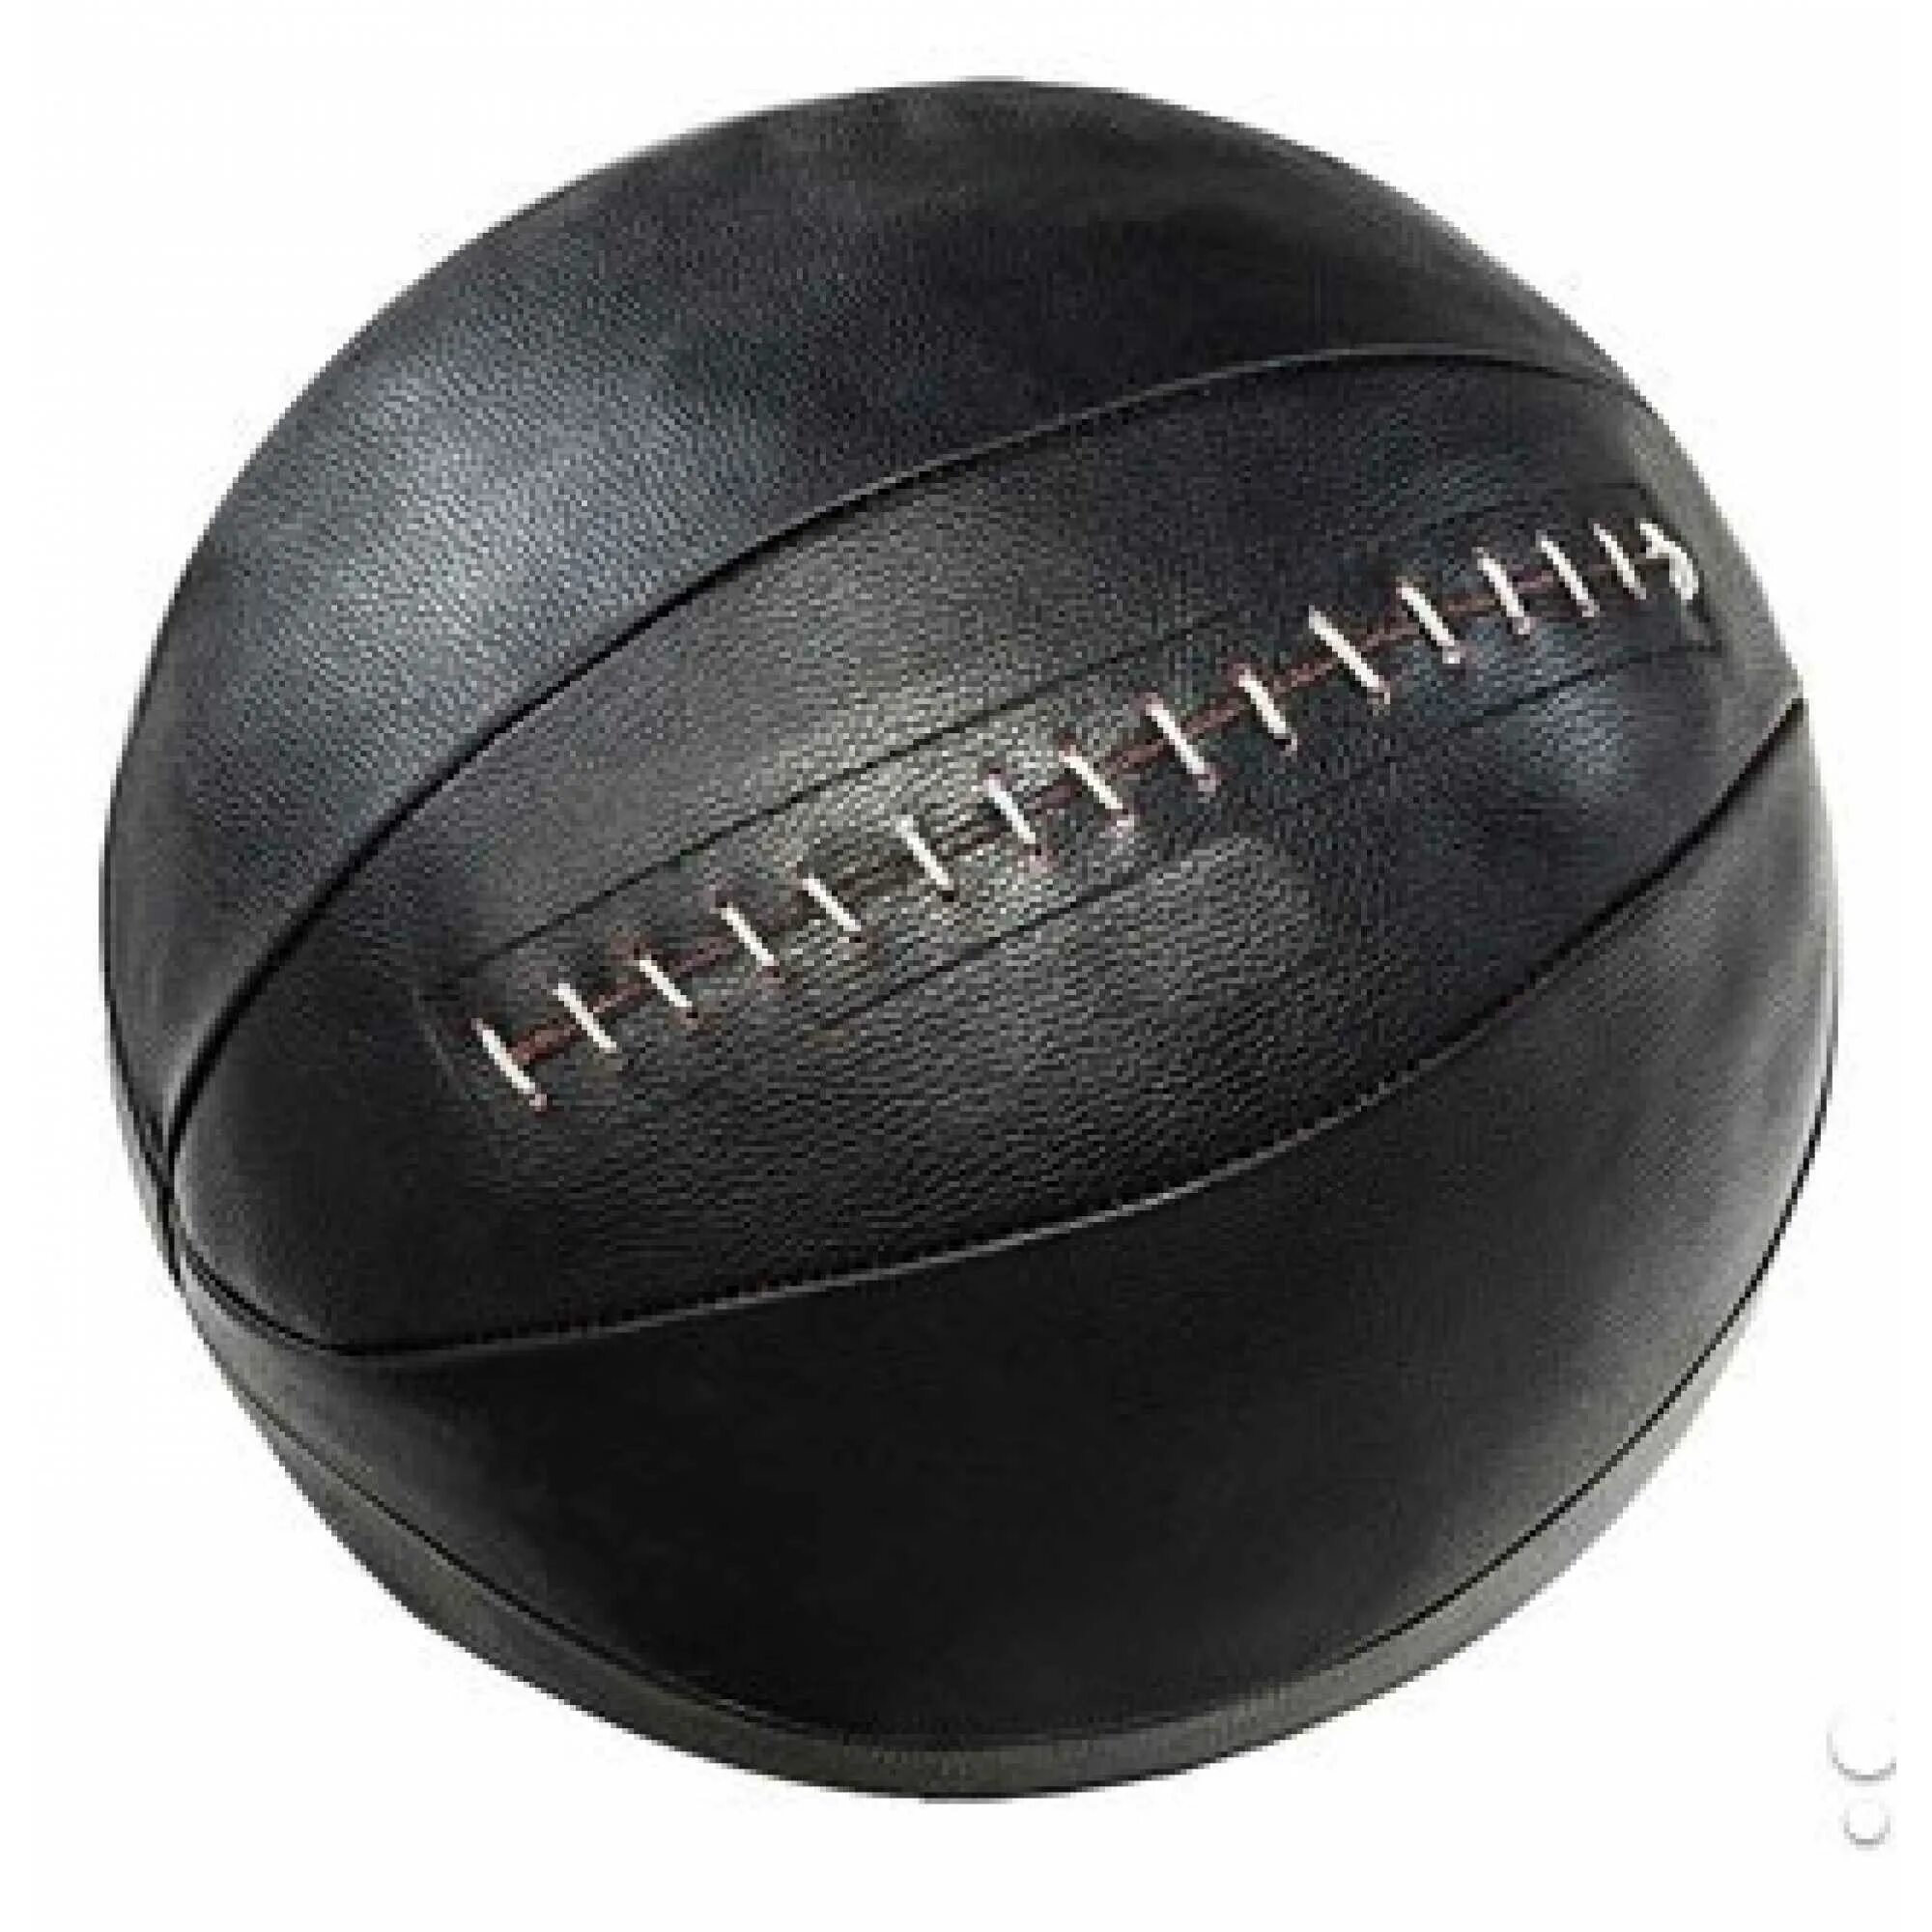 Весы мячи футбола. Медбол Torres al00225. Медицинбол 15 кг. Мяч набивной медбол 6кг. Медбол Lite Weights 1704lw, 4 кг.